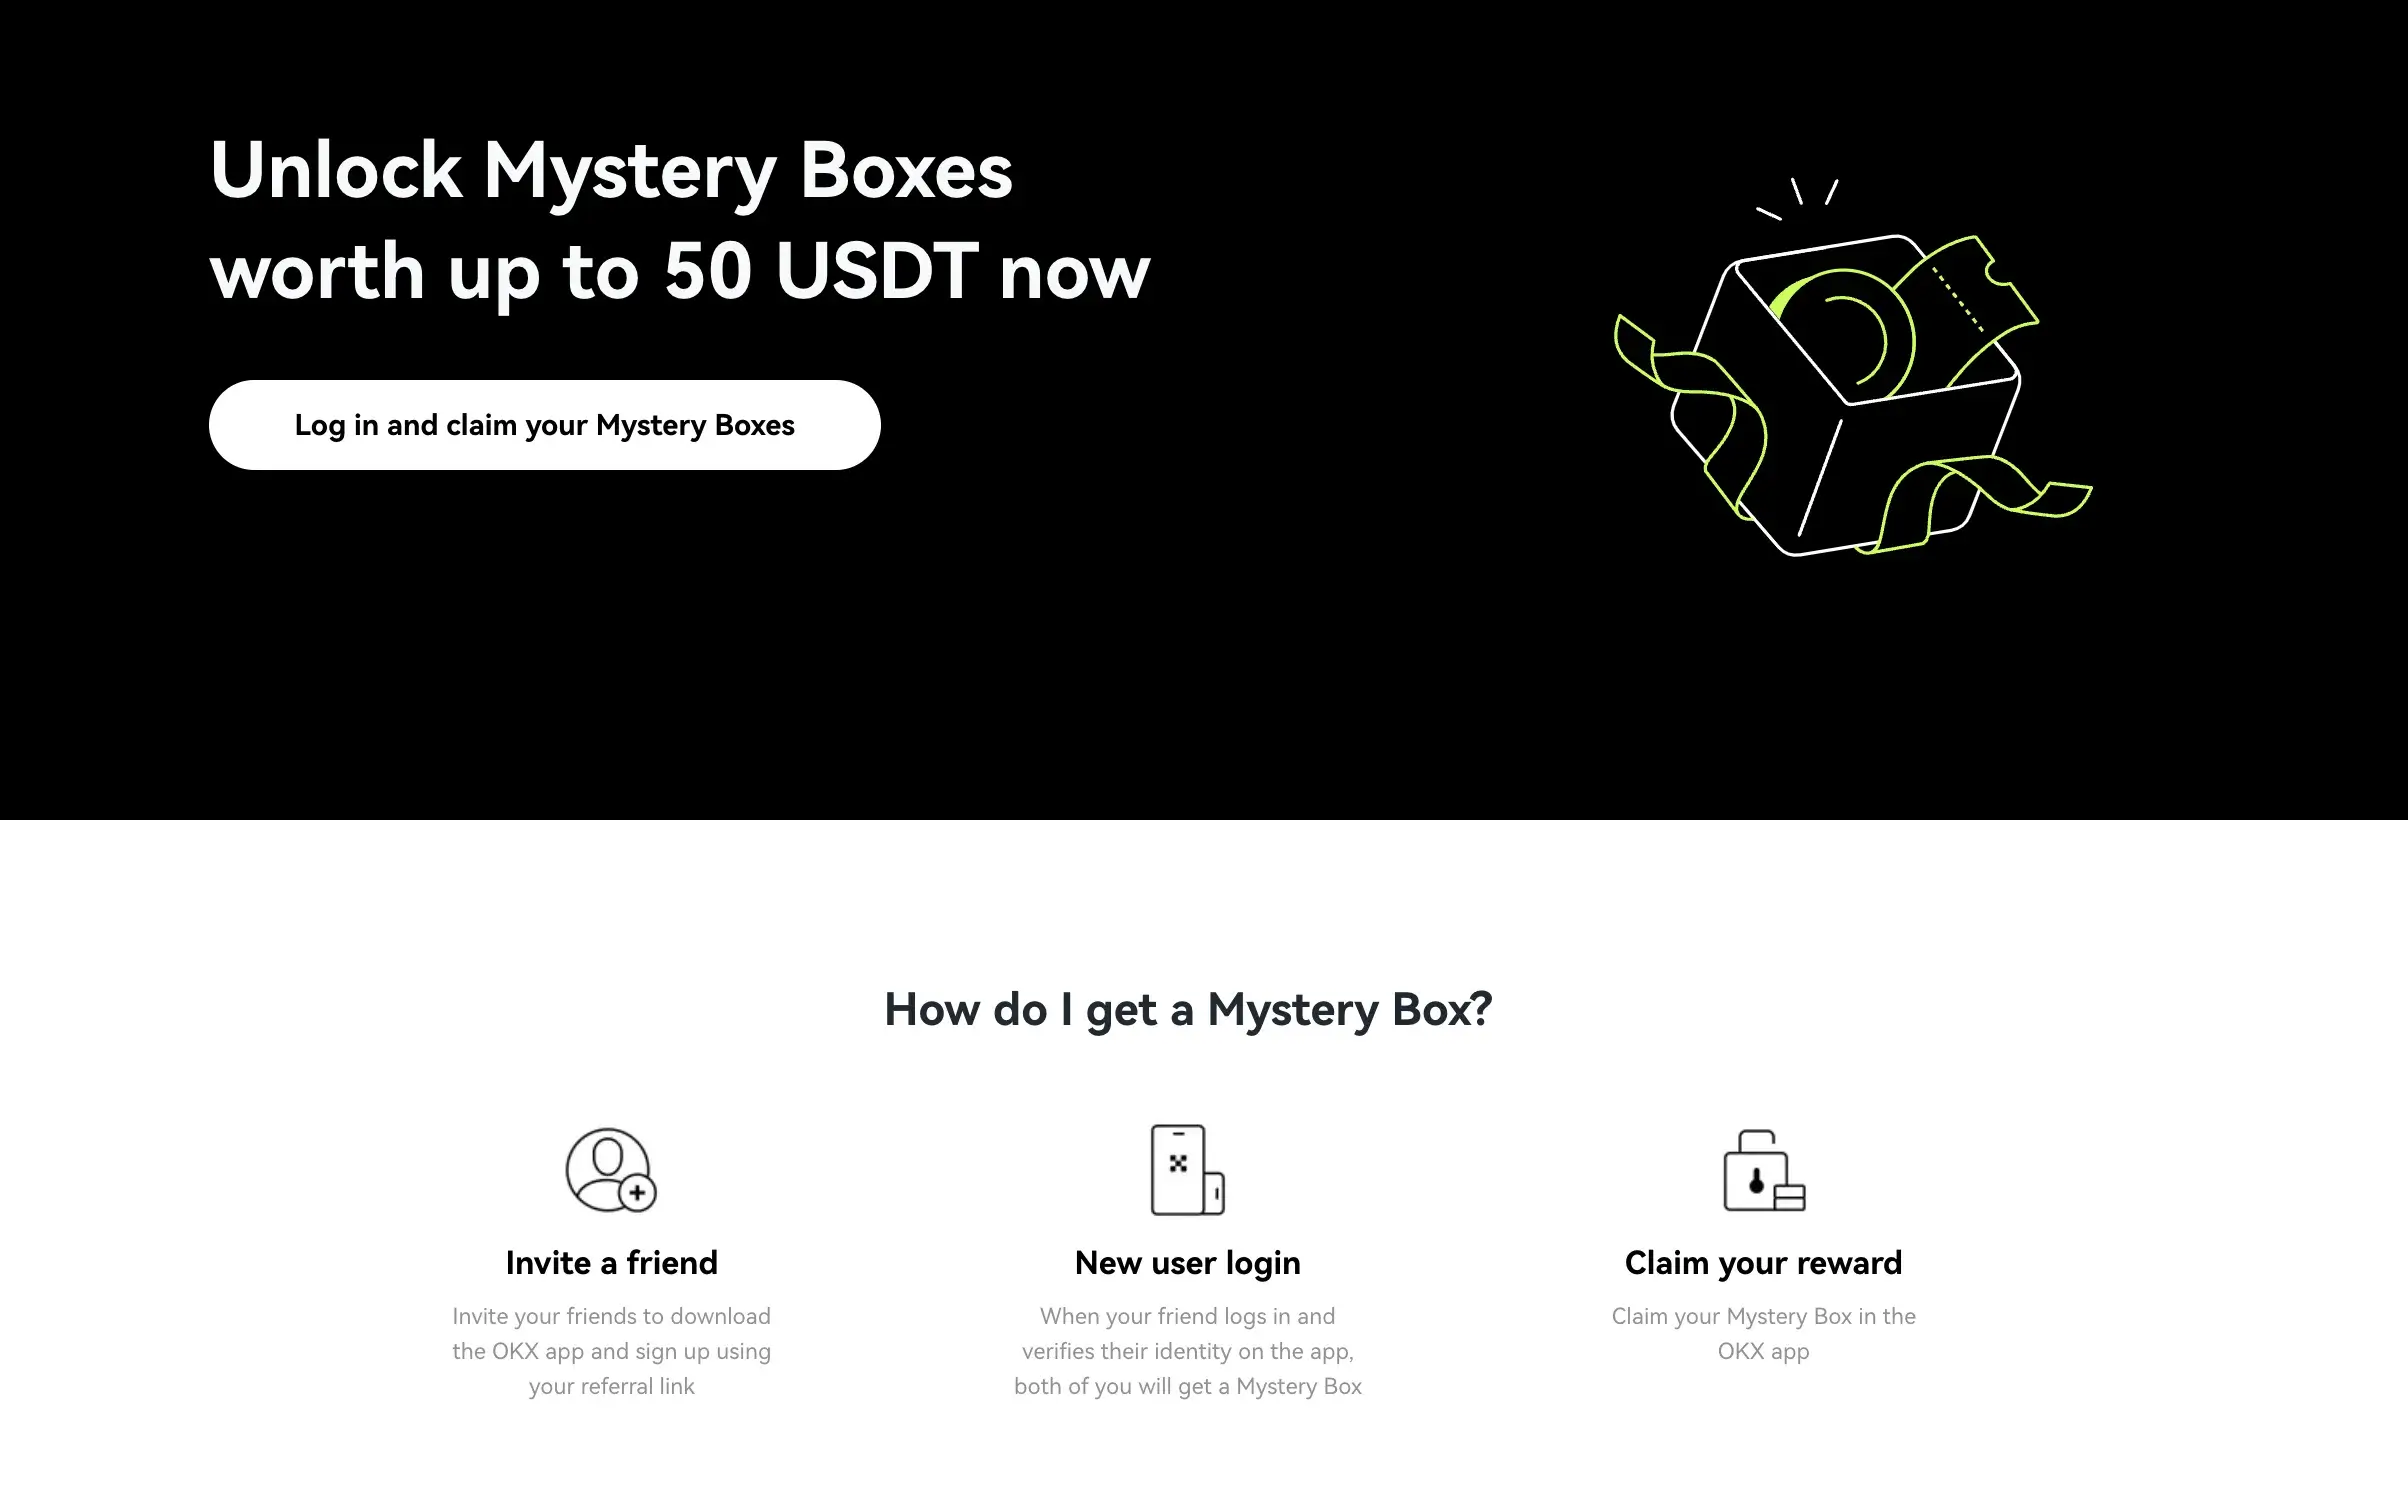 6. OKX - Get a Free Mystery Box Worth Up to 50 USDT